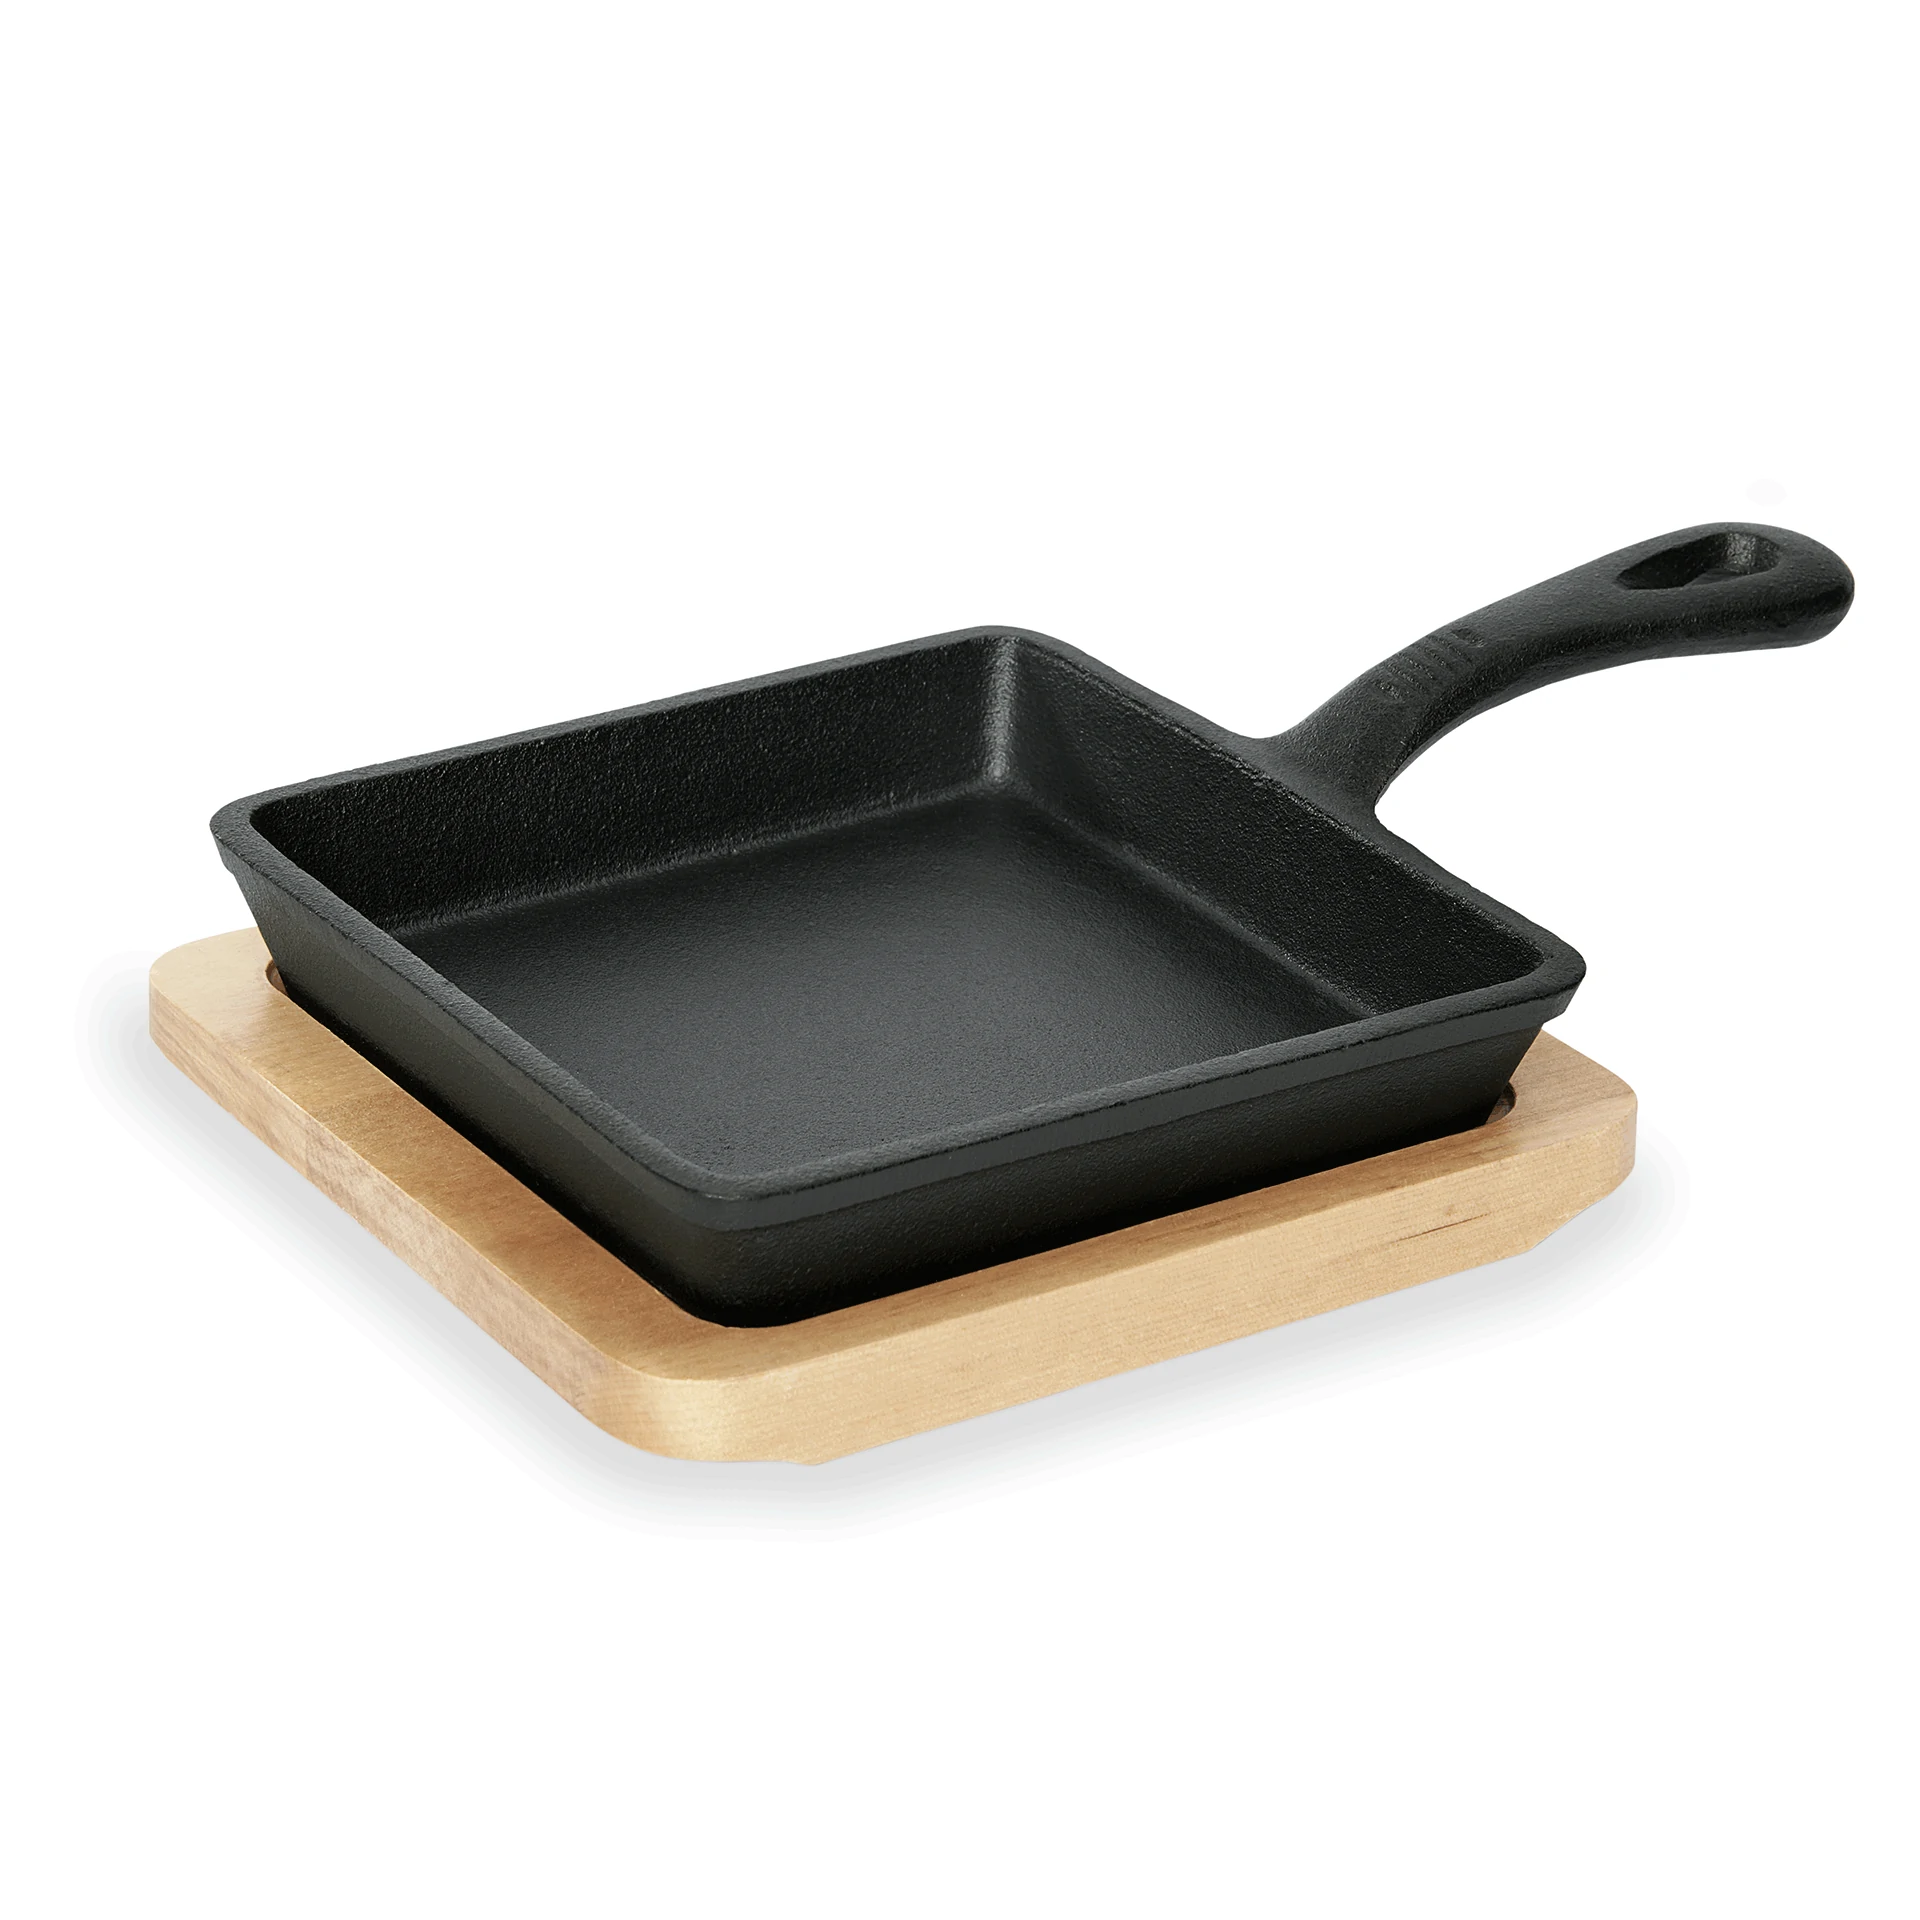 Mini serving pan